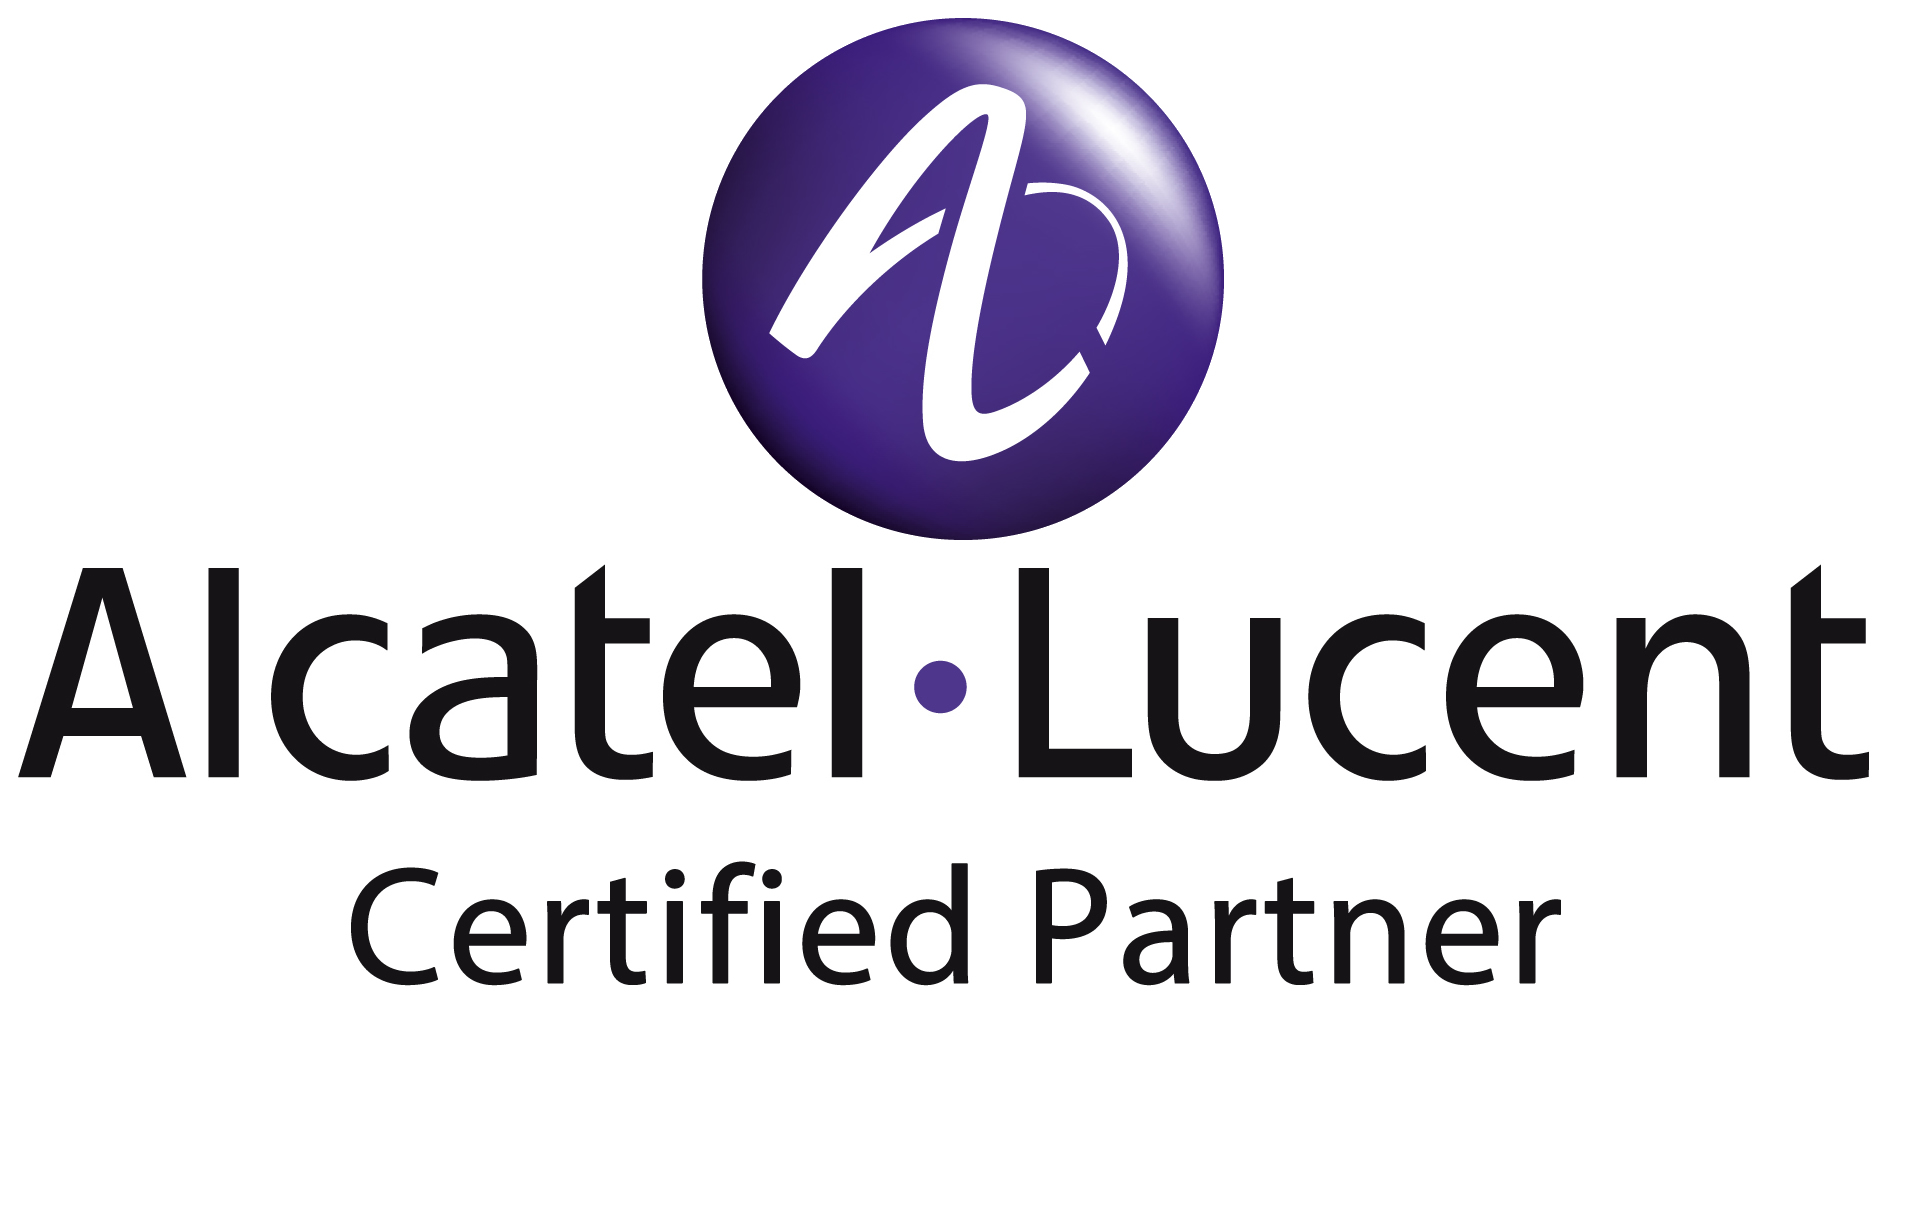 Alcatel Lucent Logo 